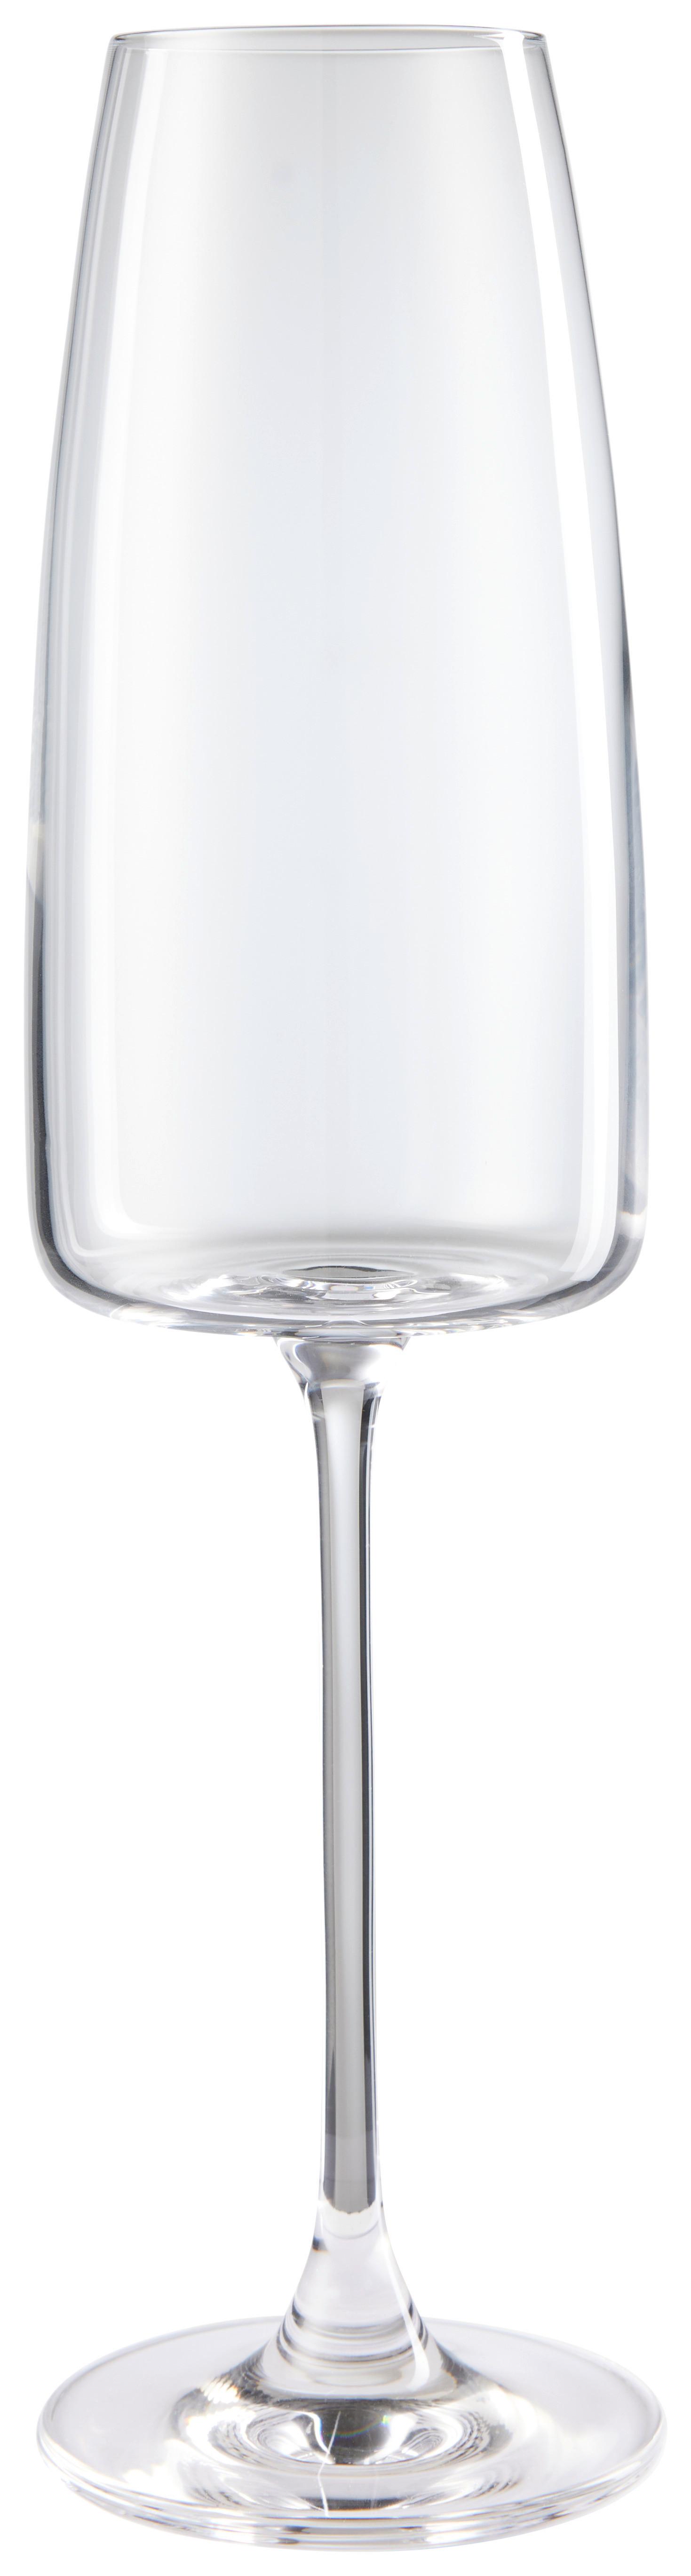 Sektglas Kiki in Transparent ca. 340 ml - Transparent, Modern, Glas (6,6/25cm) - Premium Living